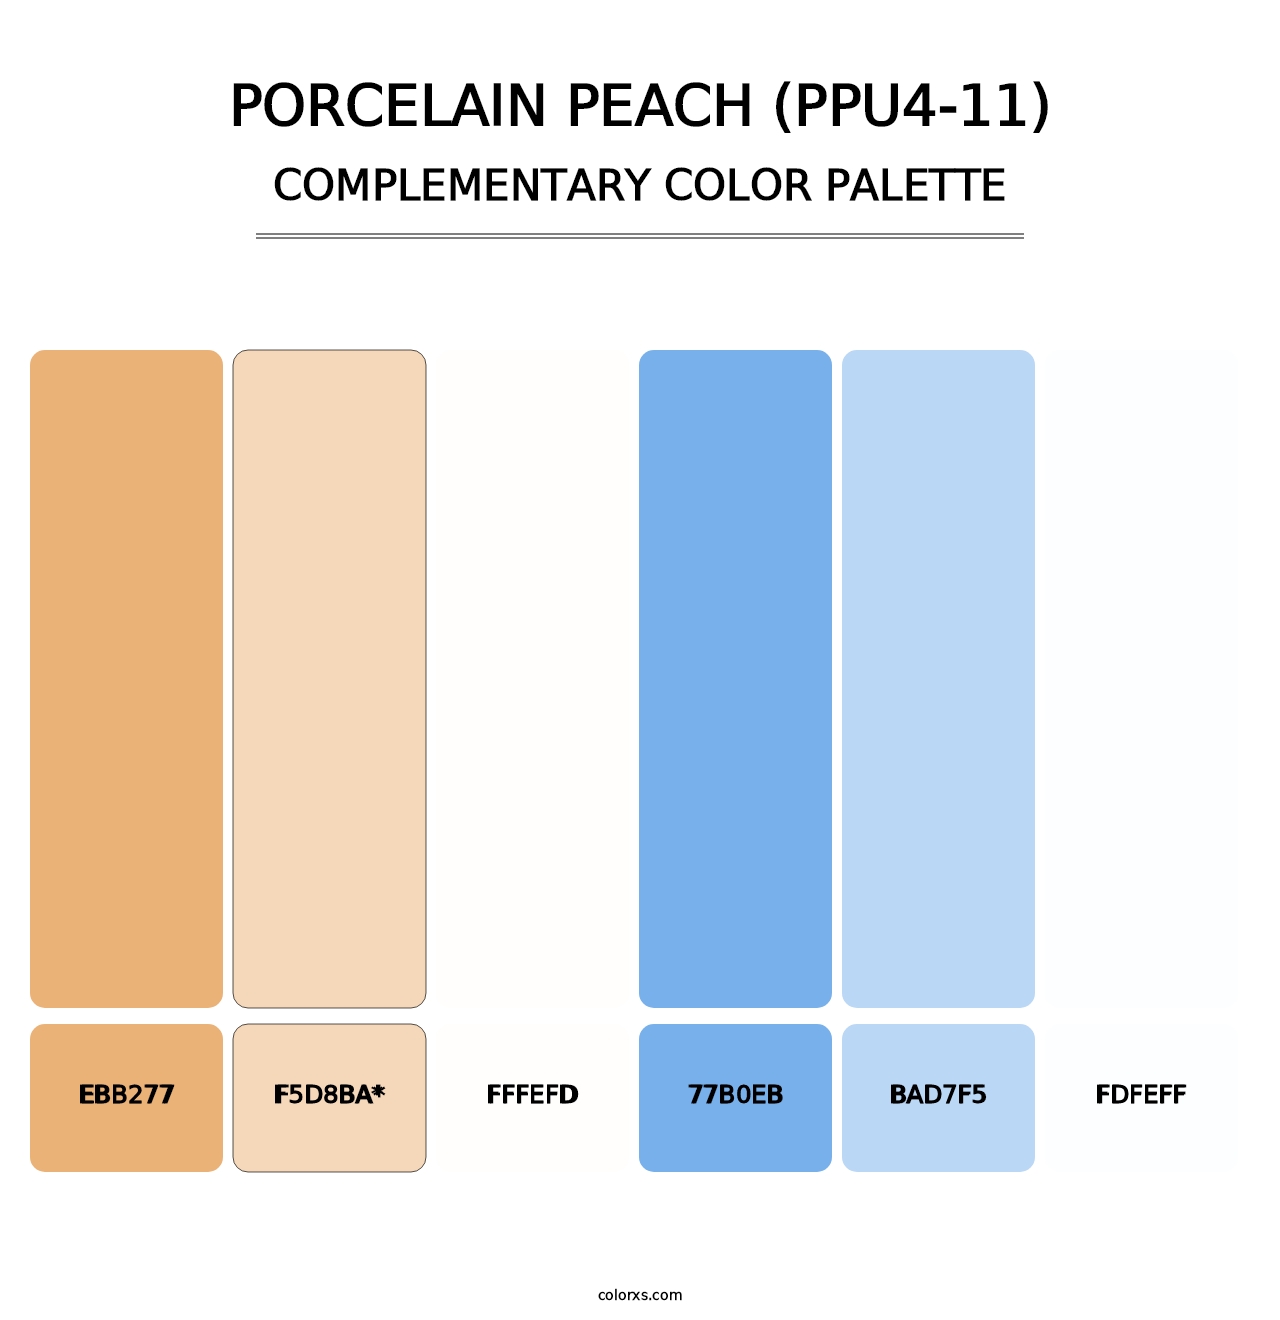 Porcelain Peach (PPU4-11) - Complementary Color Palette